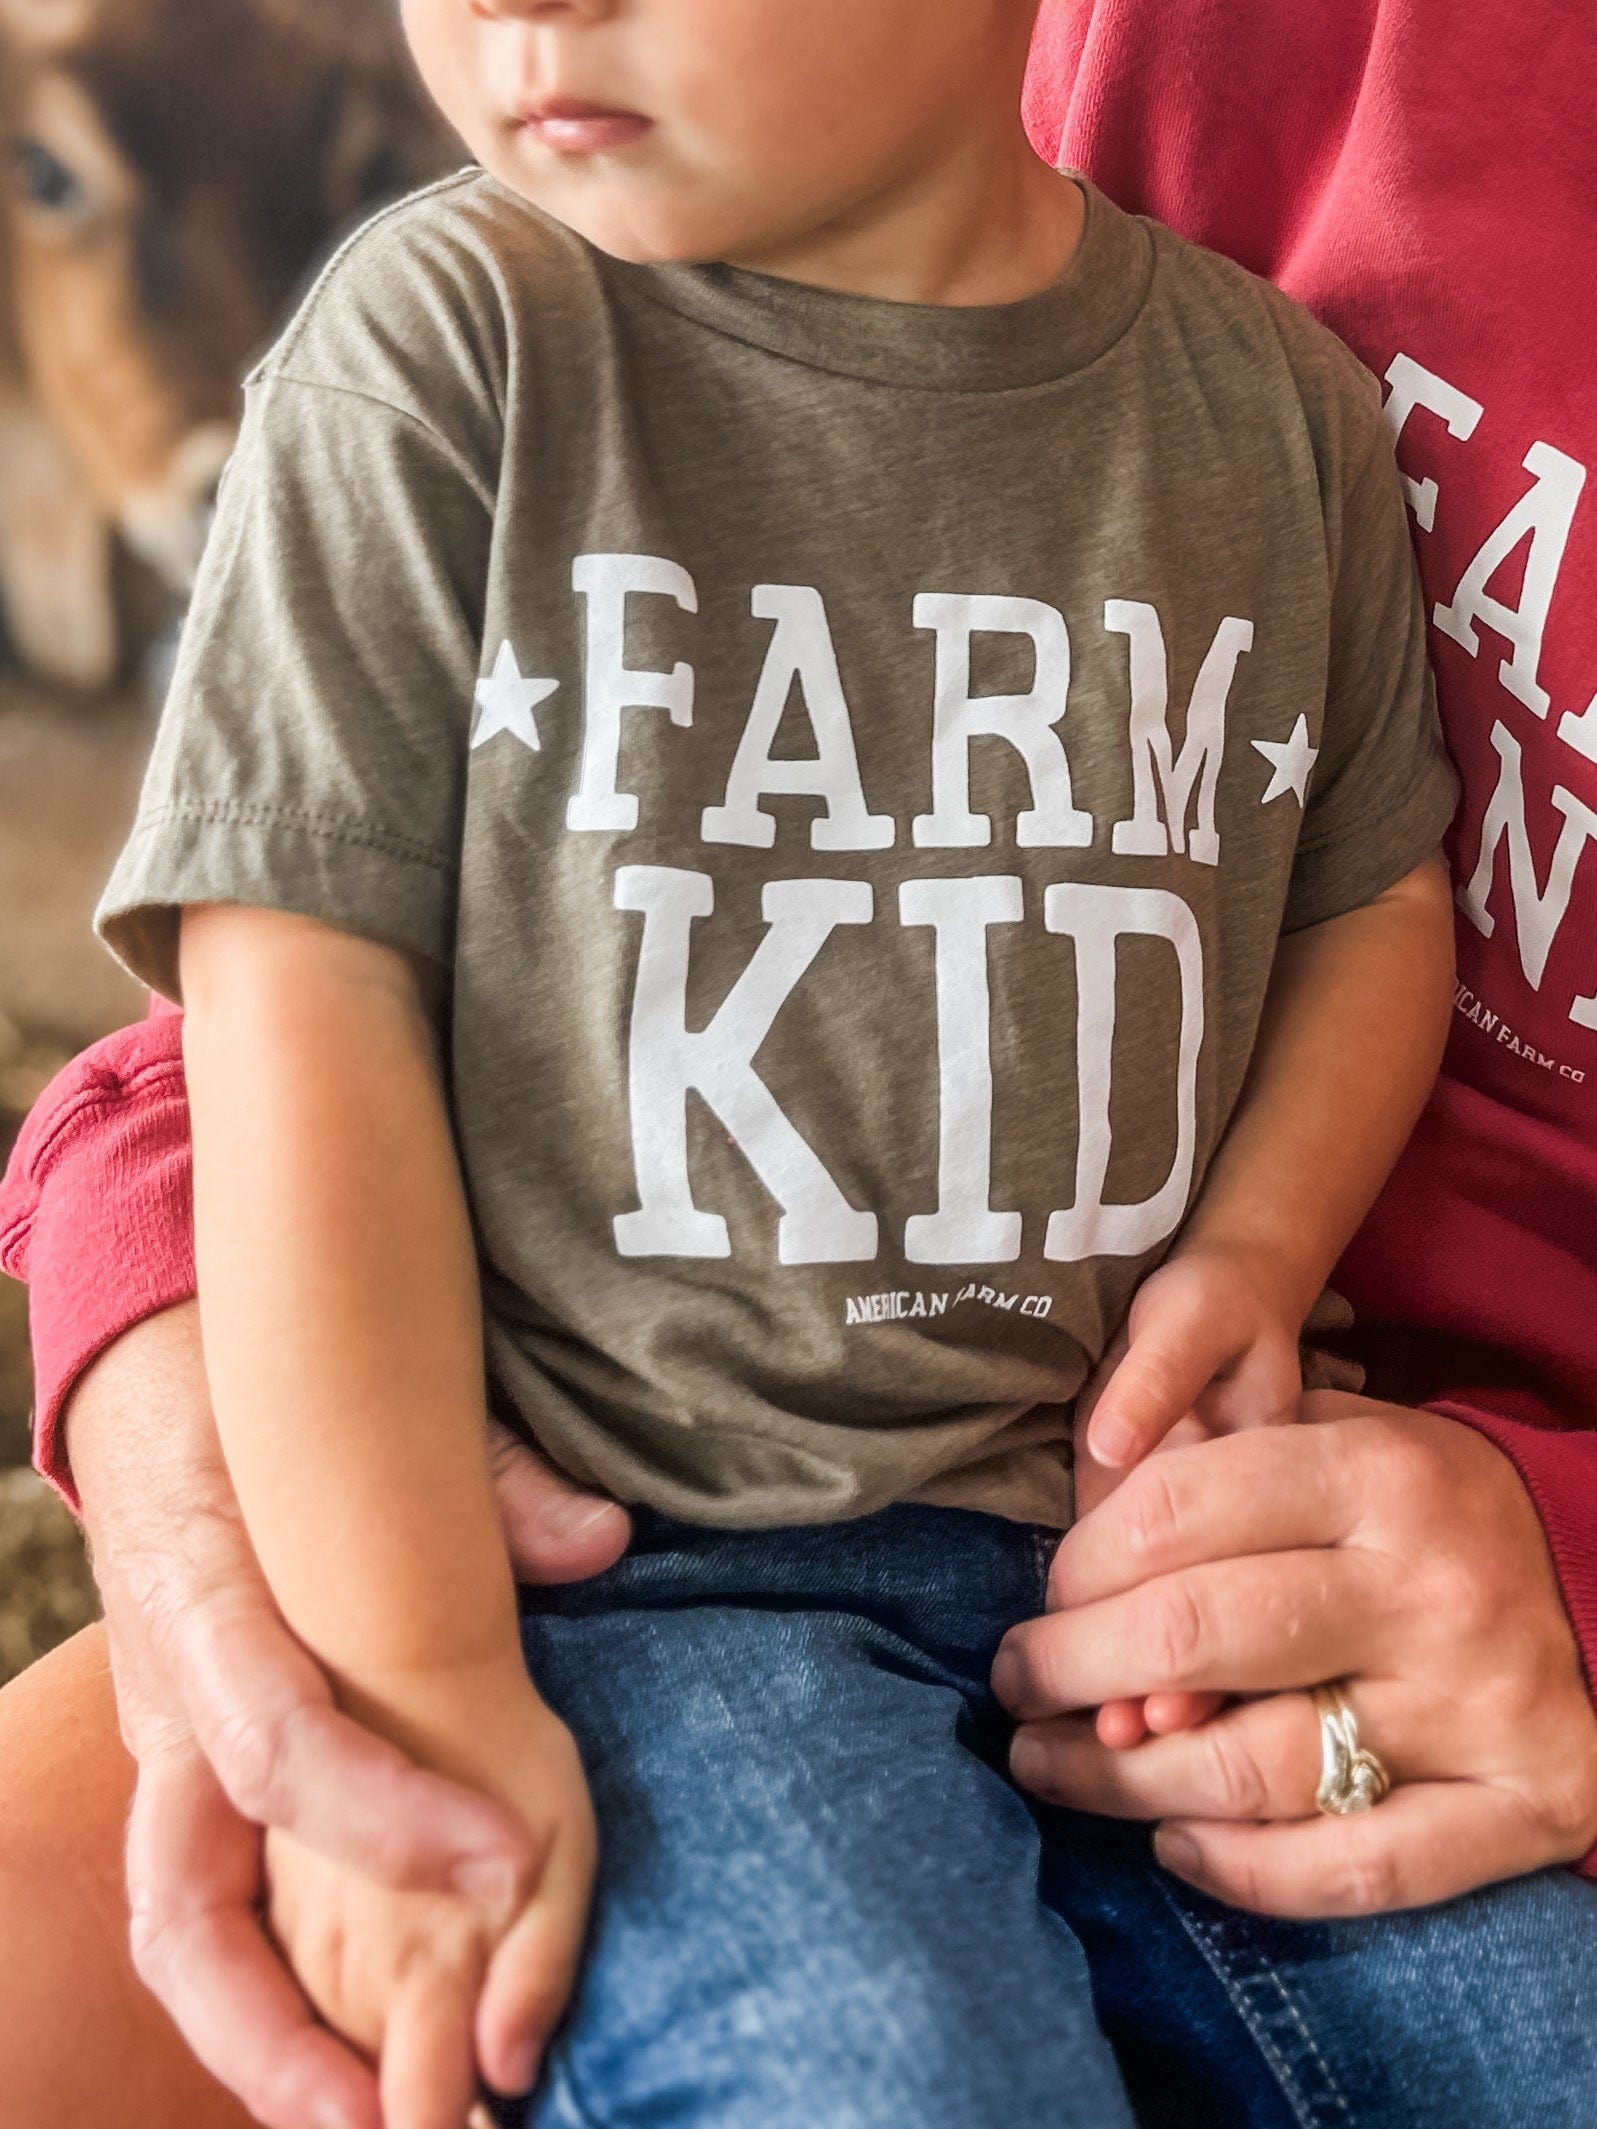 American Farm Company Shirts 'Farm Kid' Toddler/Youth Tees